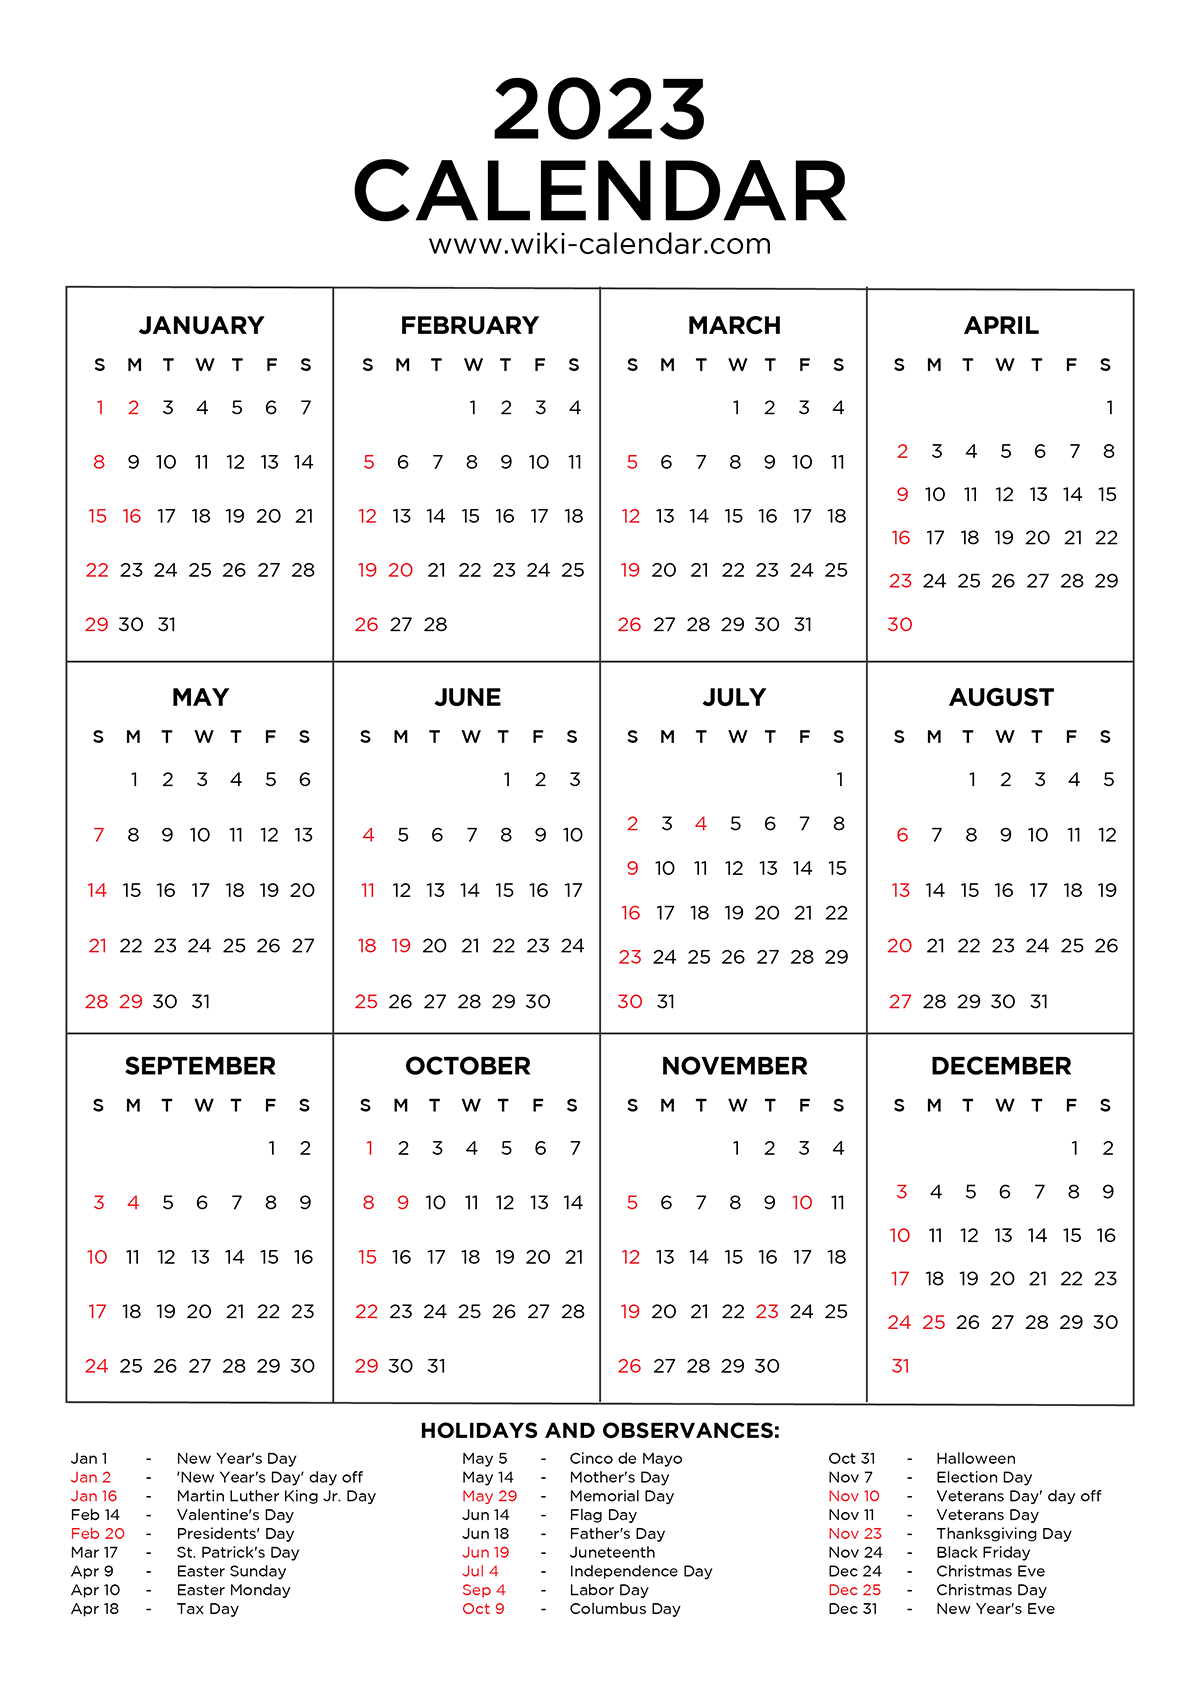 2023 Calendar Printable with Holidays